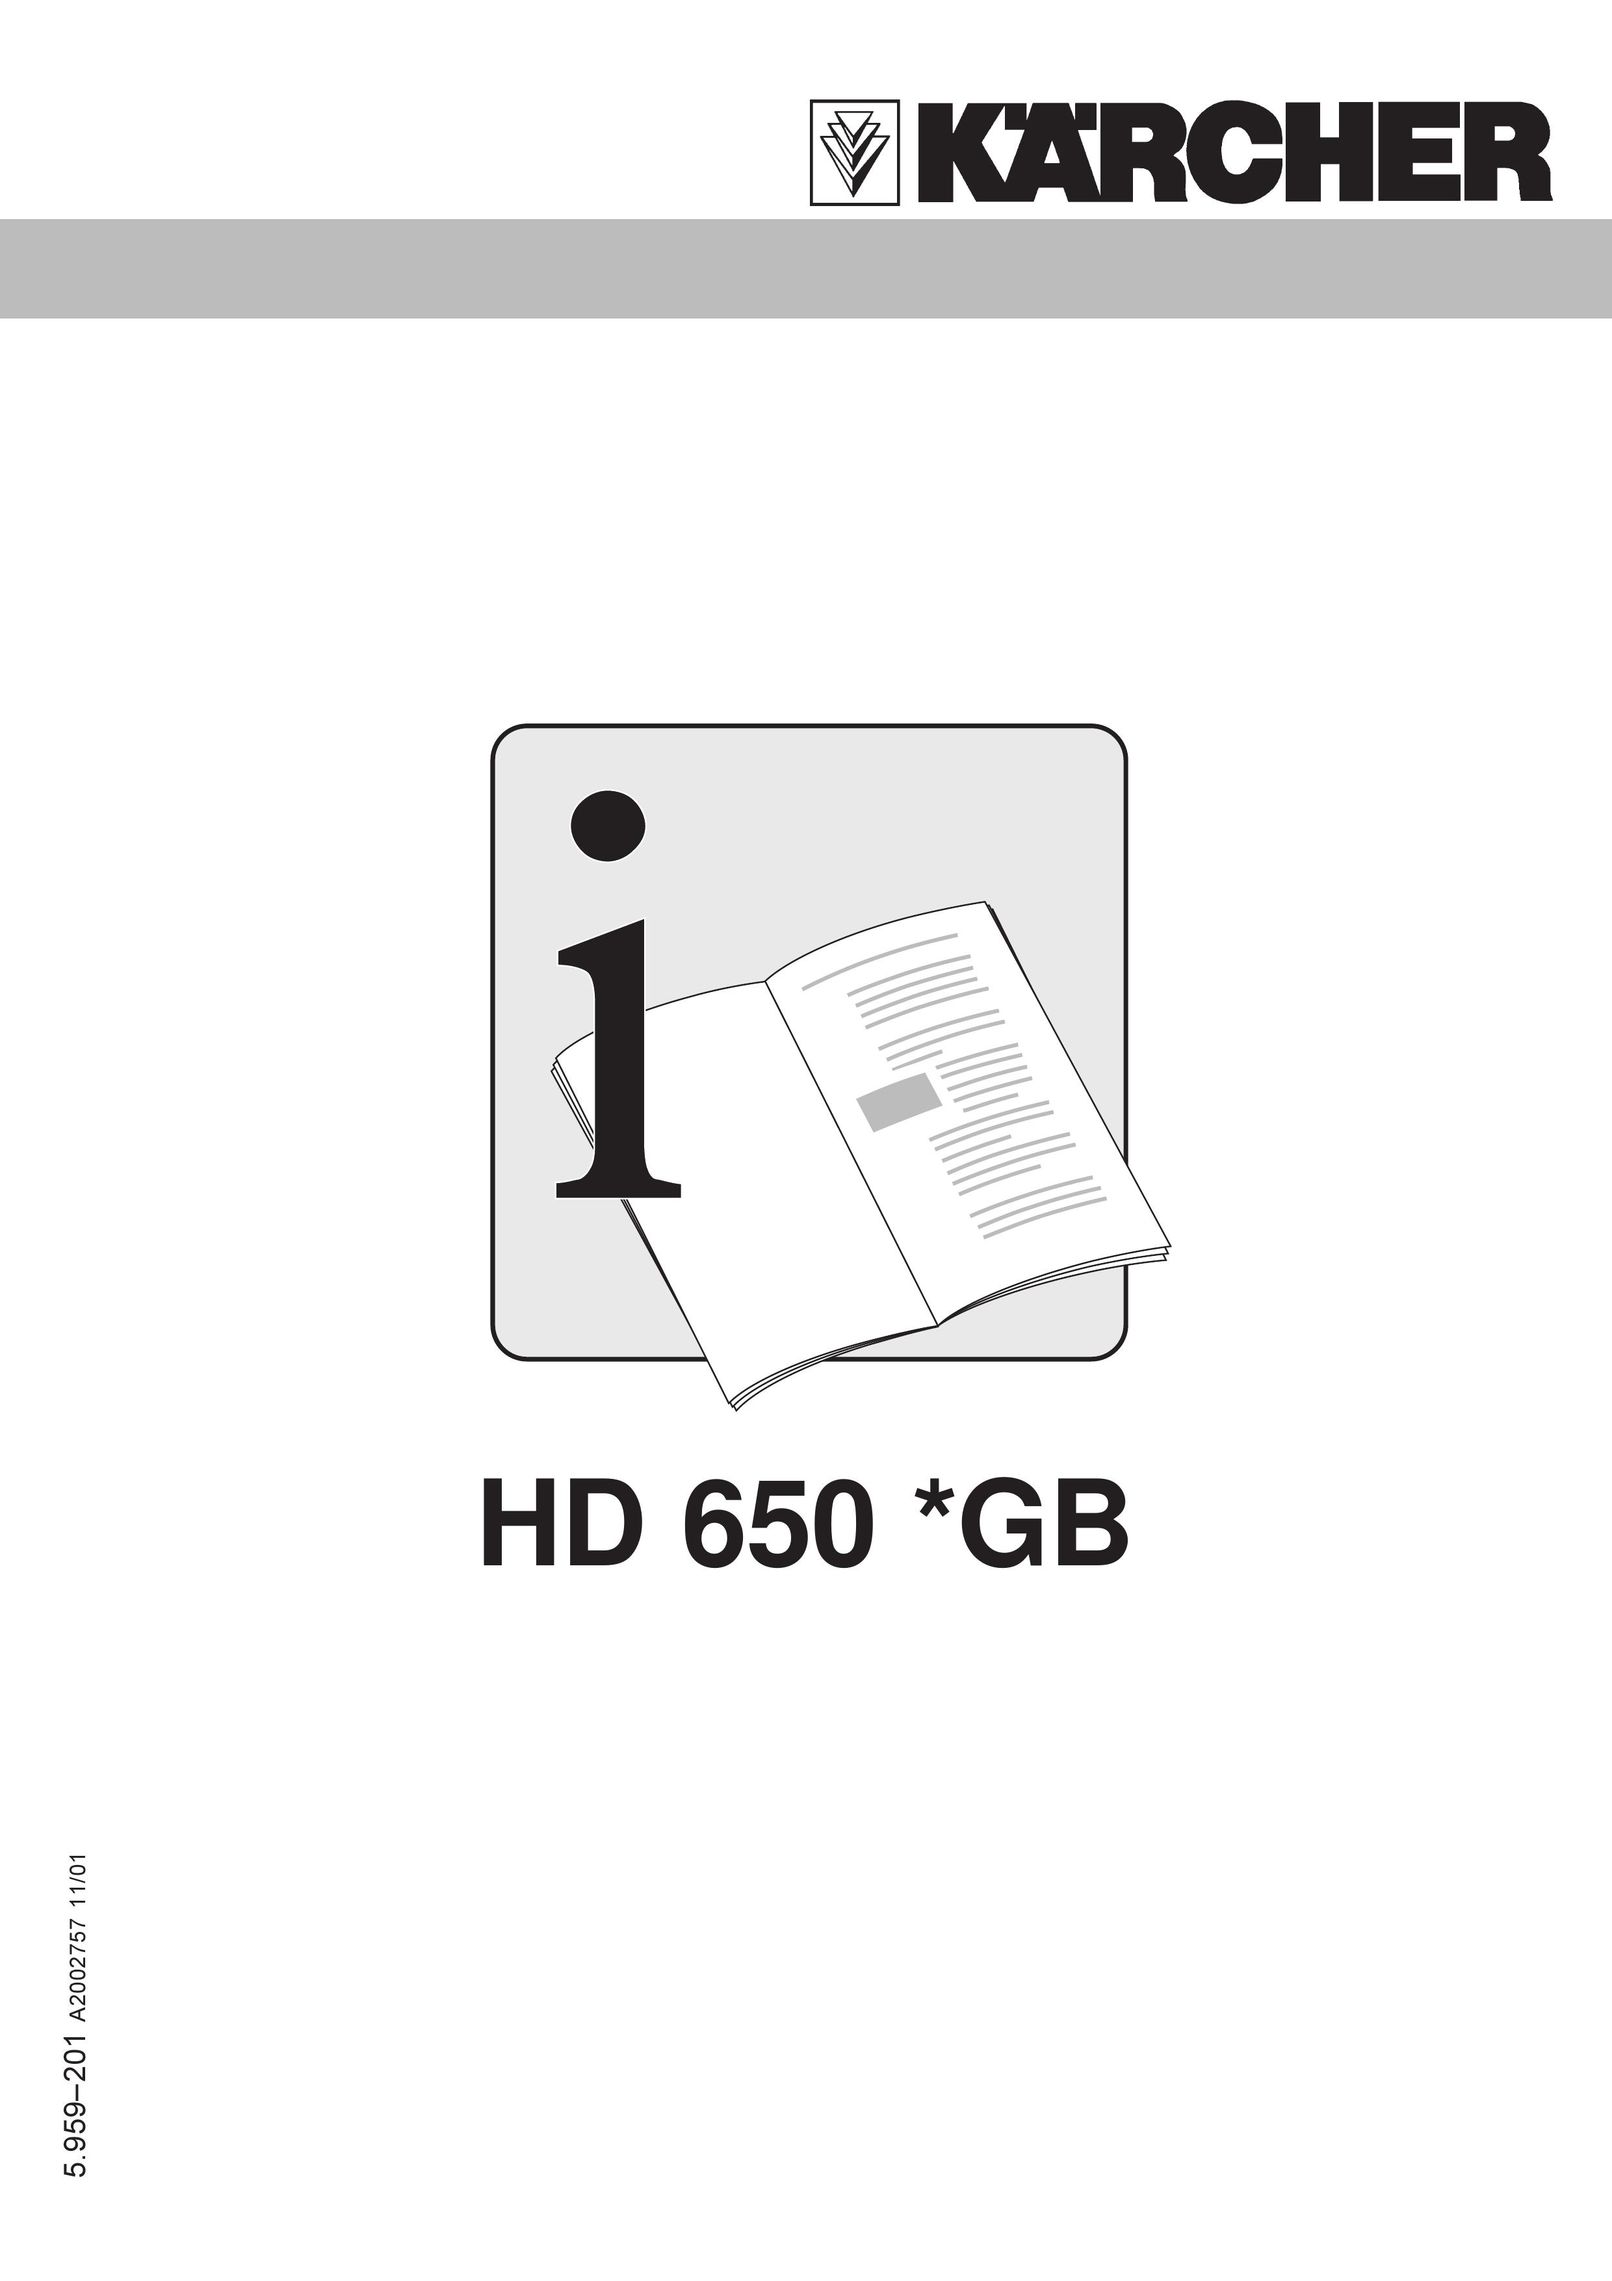 Karcher HD 650 *GB DVR User Manual